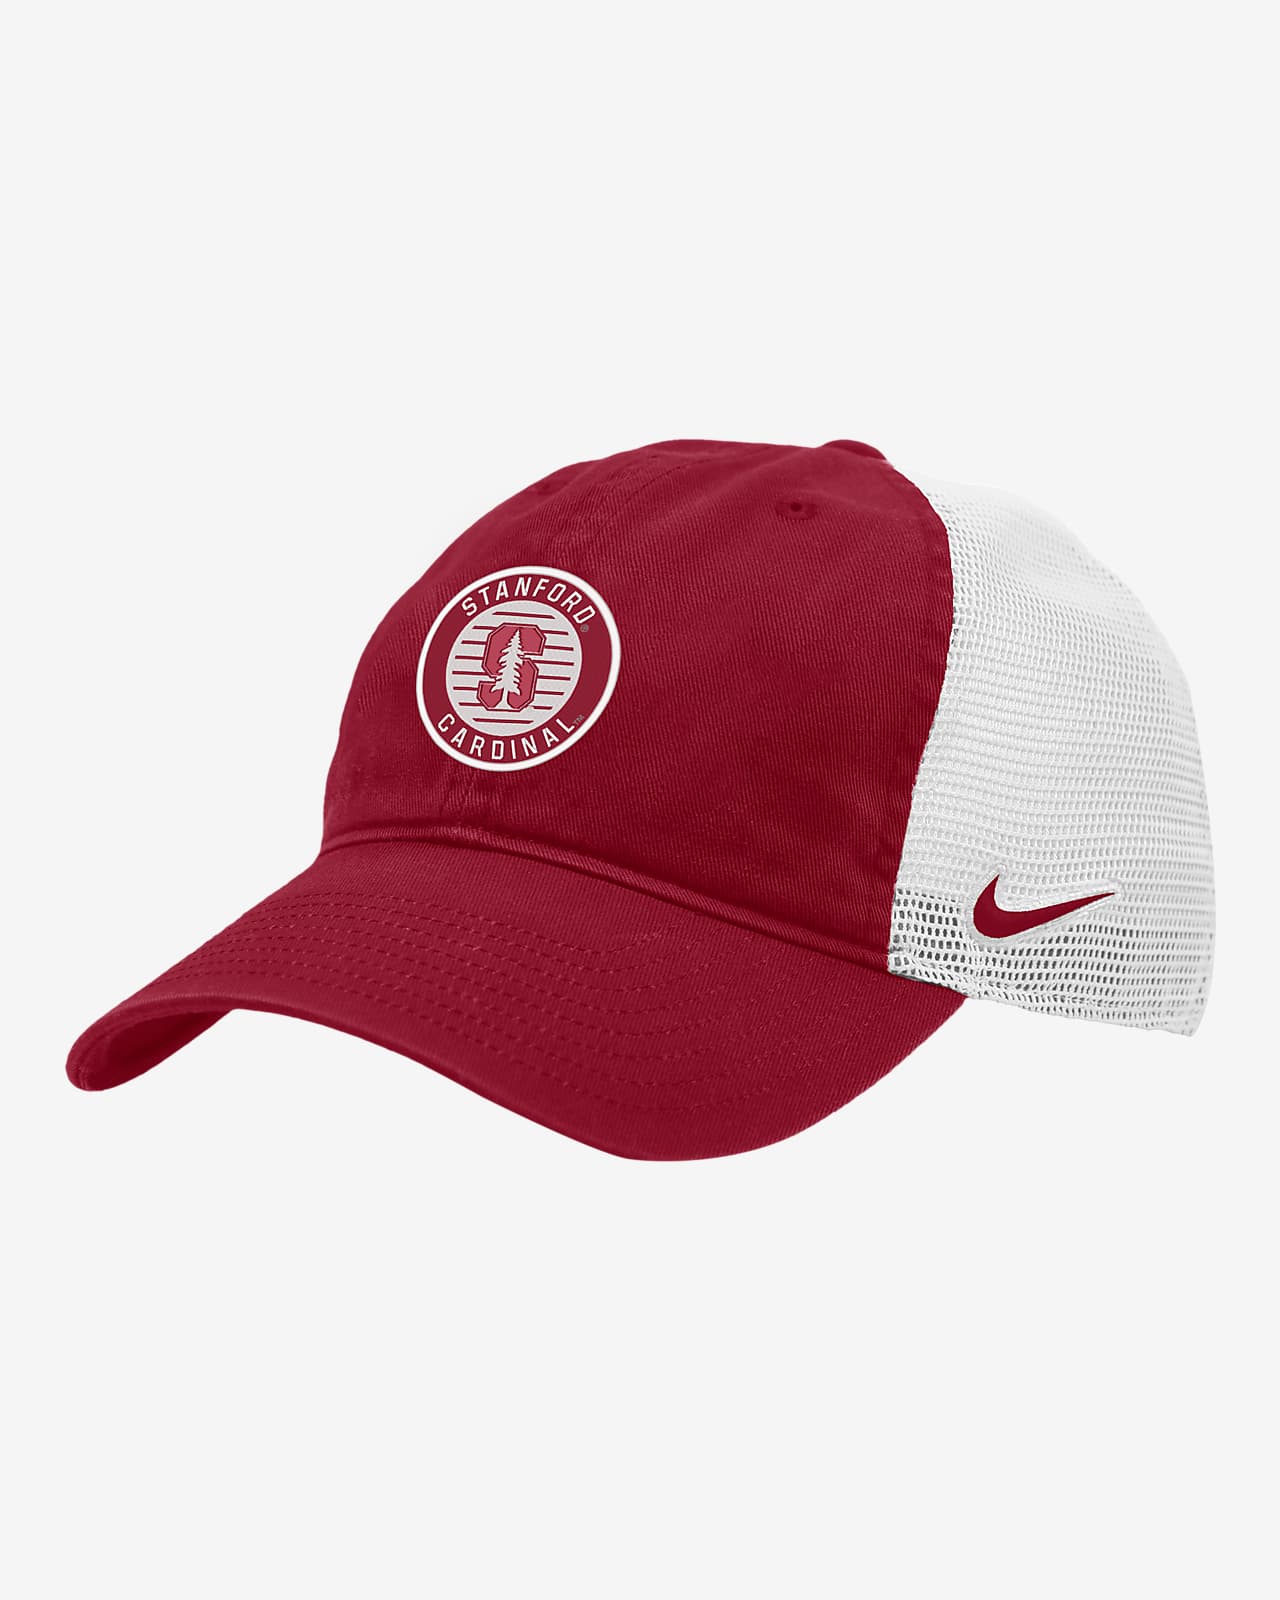 Stanford Heritage86 Nike College Trucker Hat